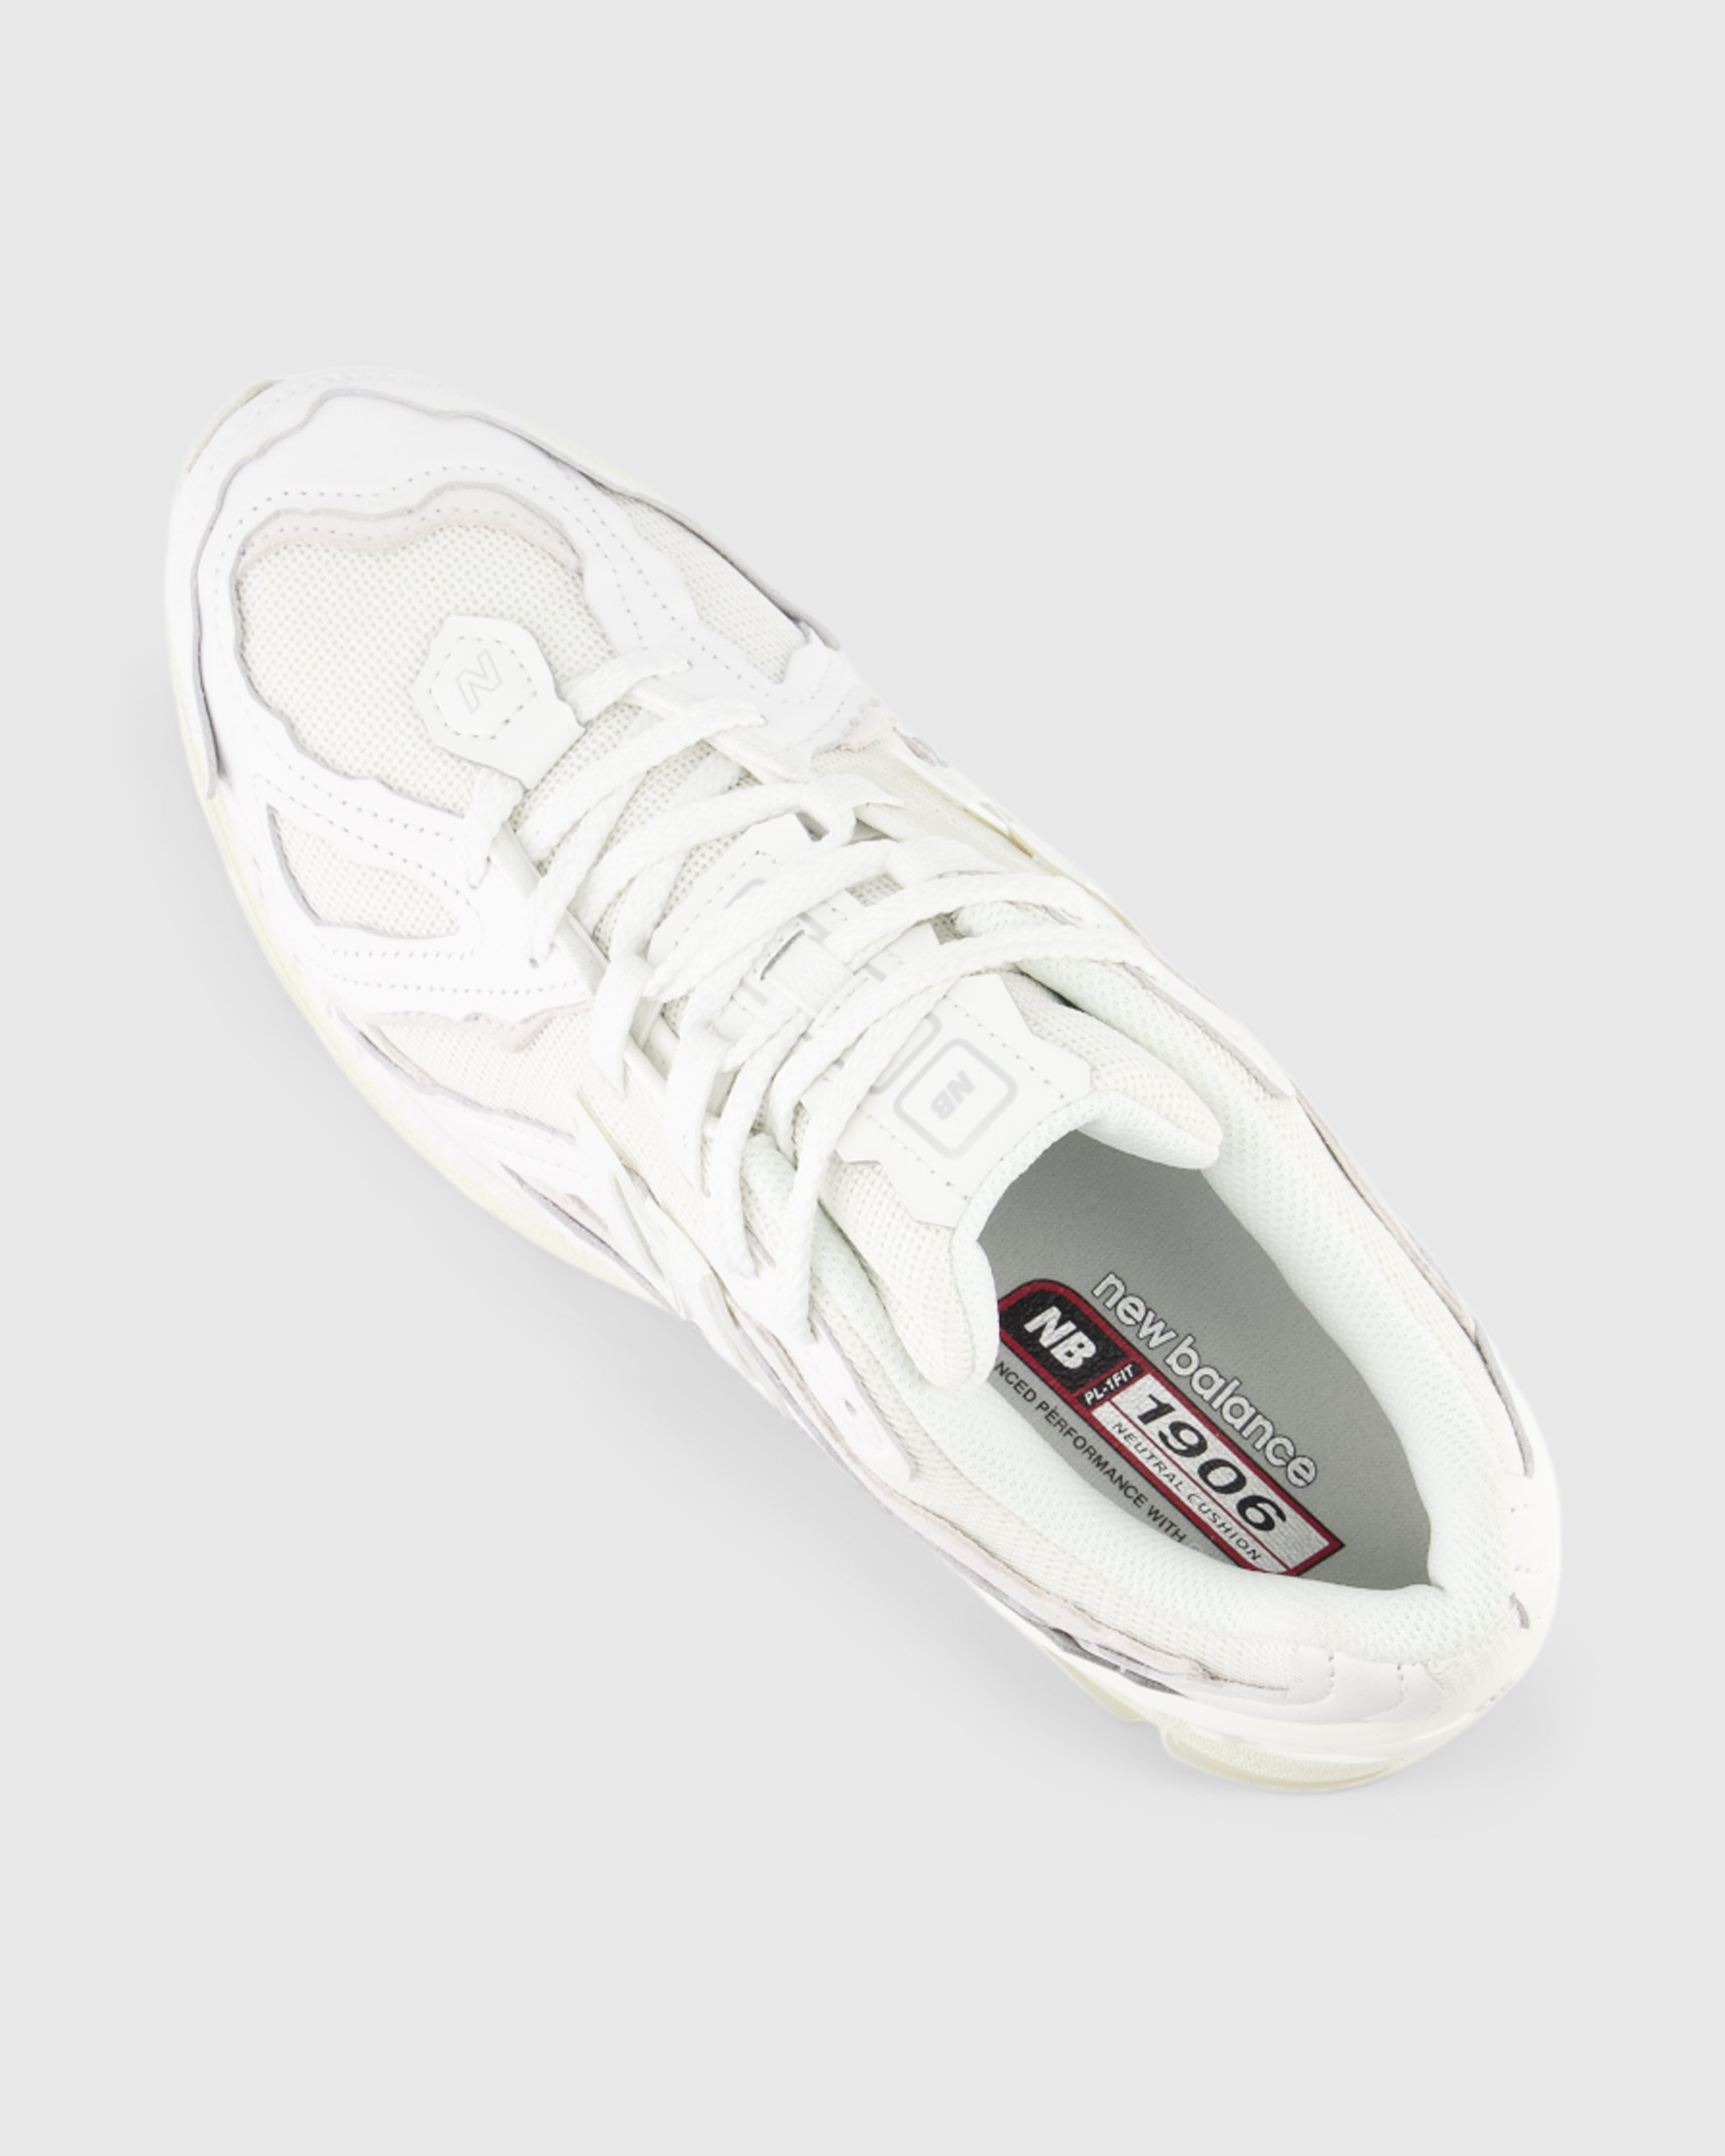 New Balance - M 1906 DE White - Footwear - White - Image 5